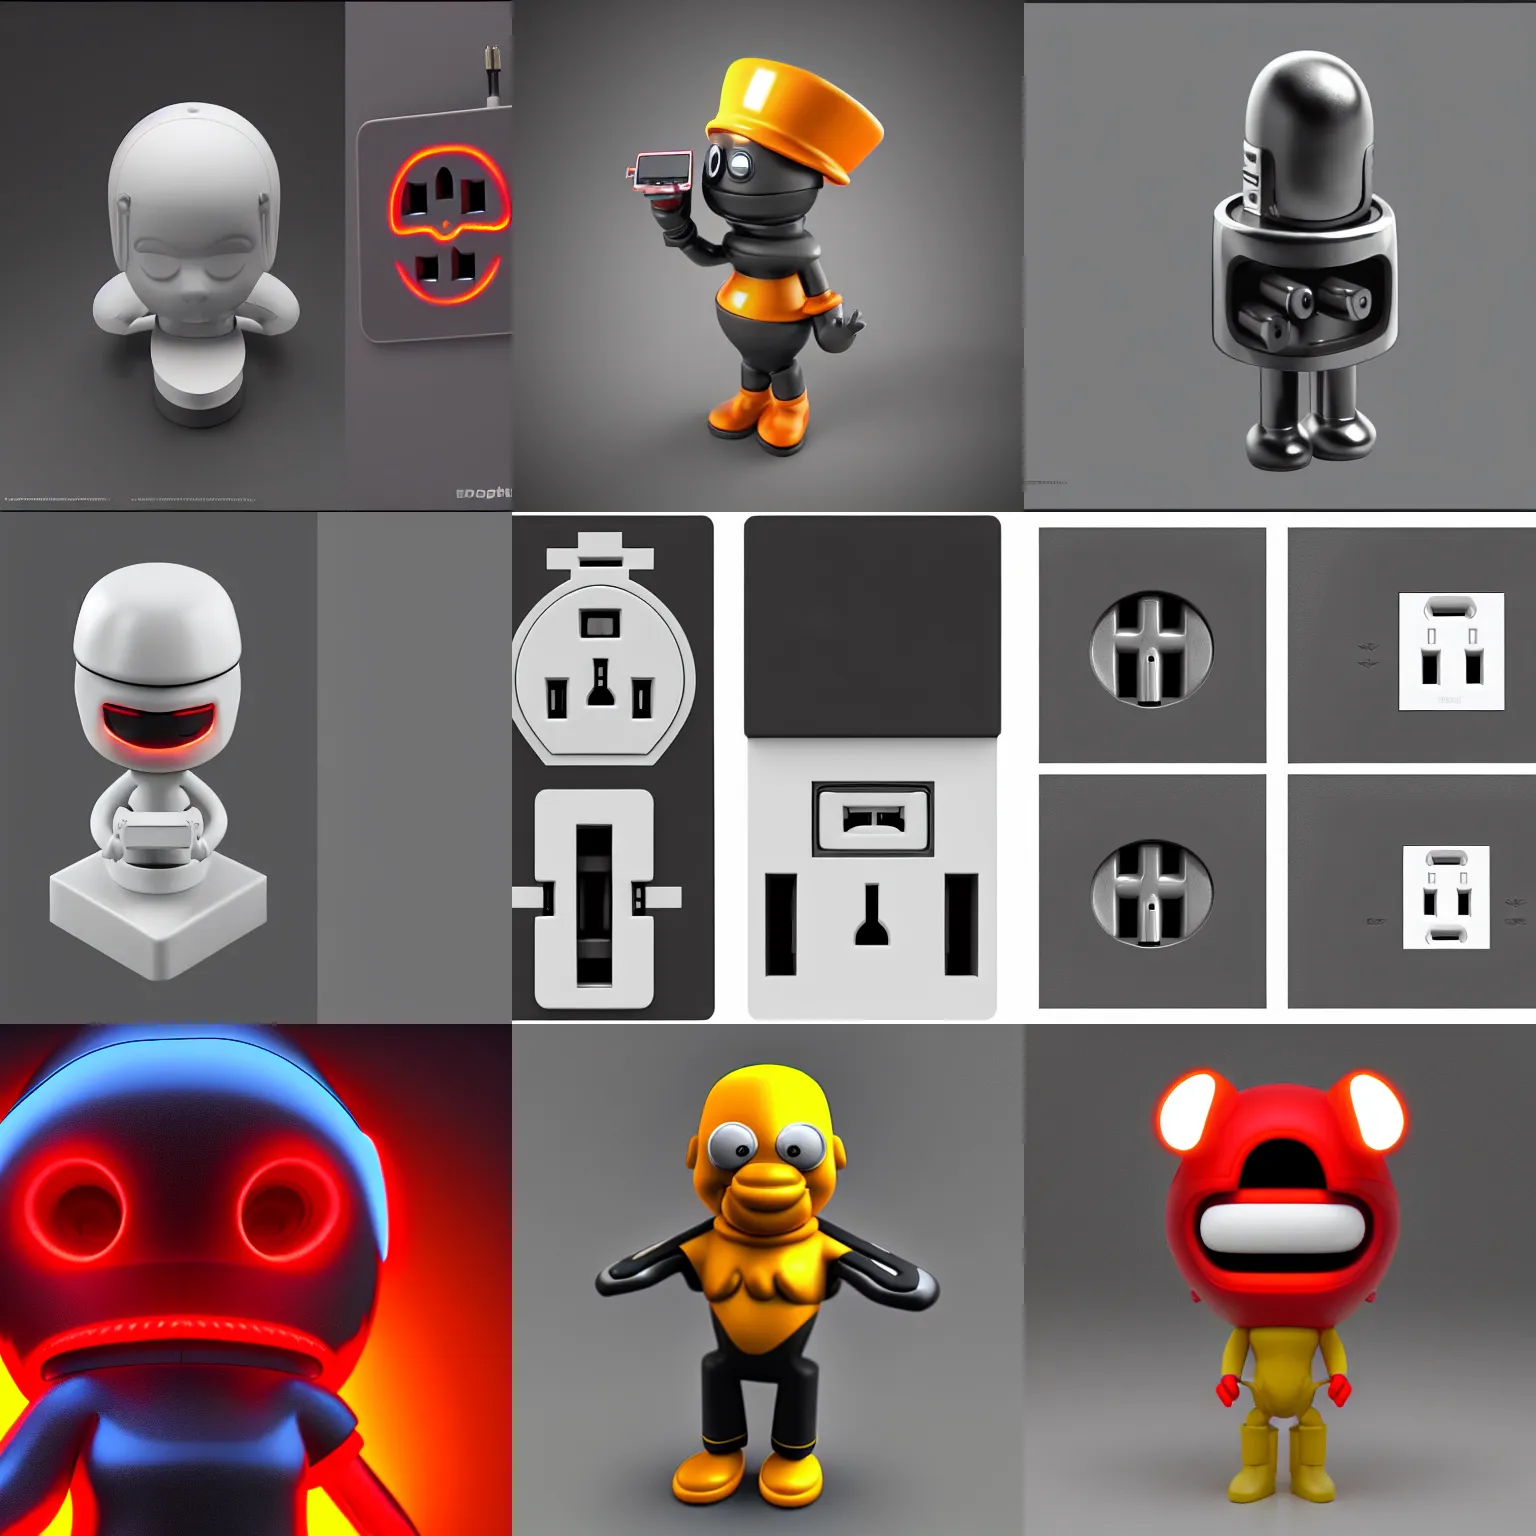 Mr.Robot [OC] : r/dataisbeautiful